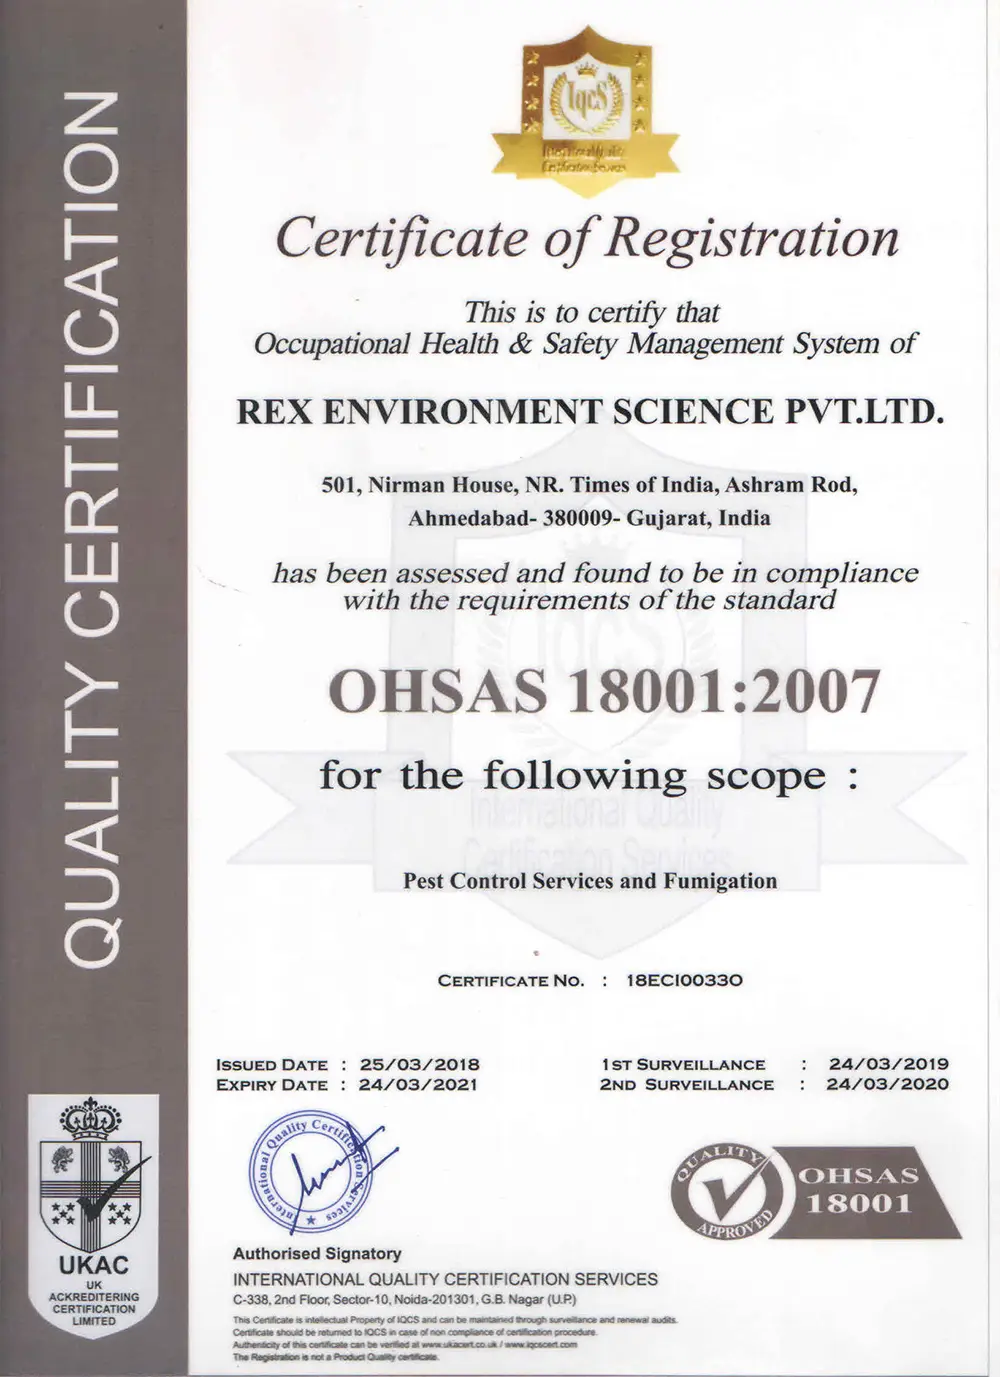 certificat